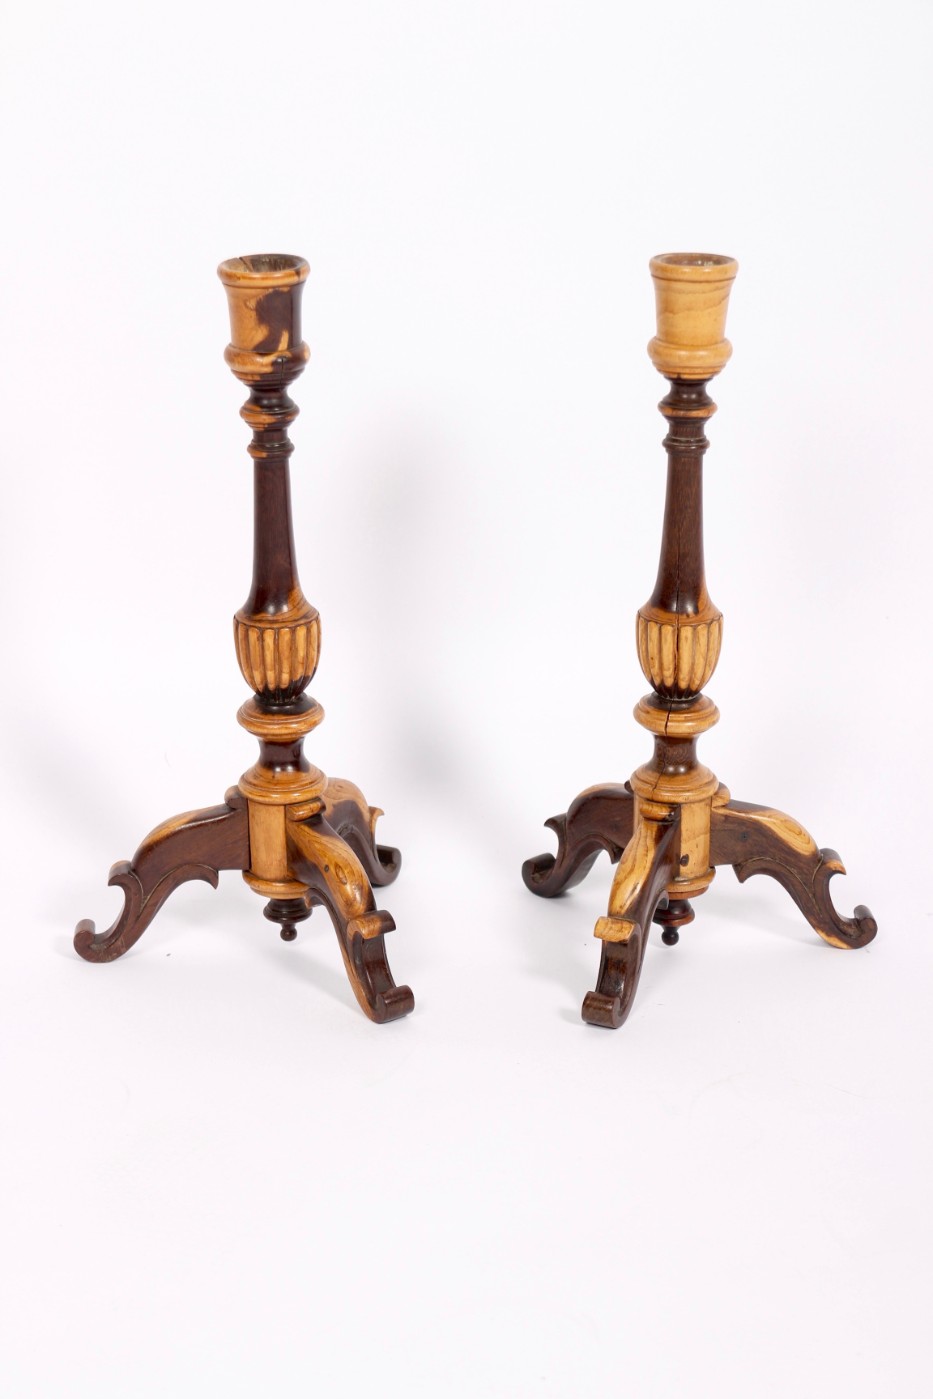 Pair of French 19th century Laburnum candlesticks